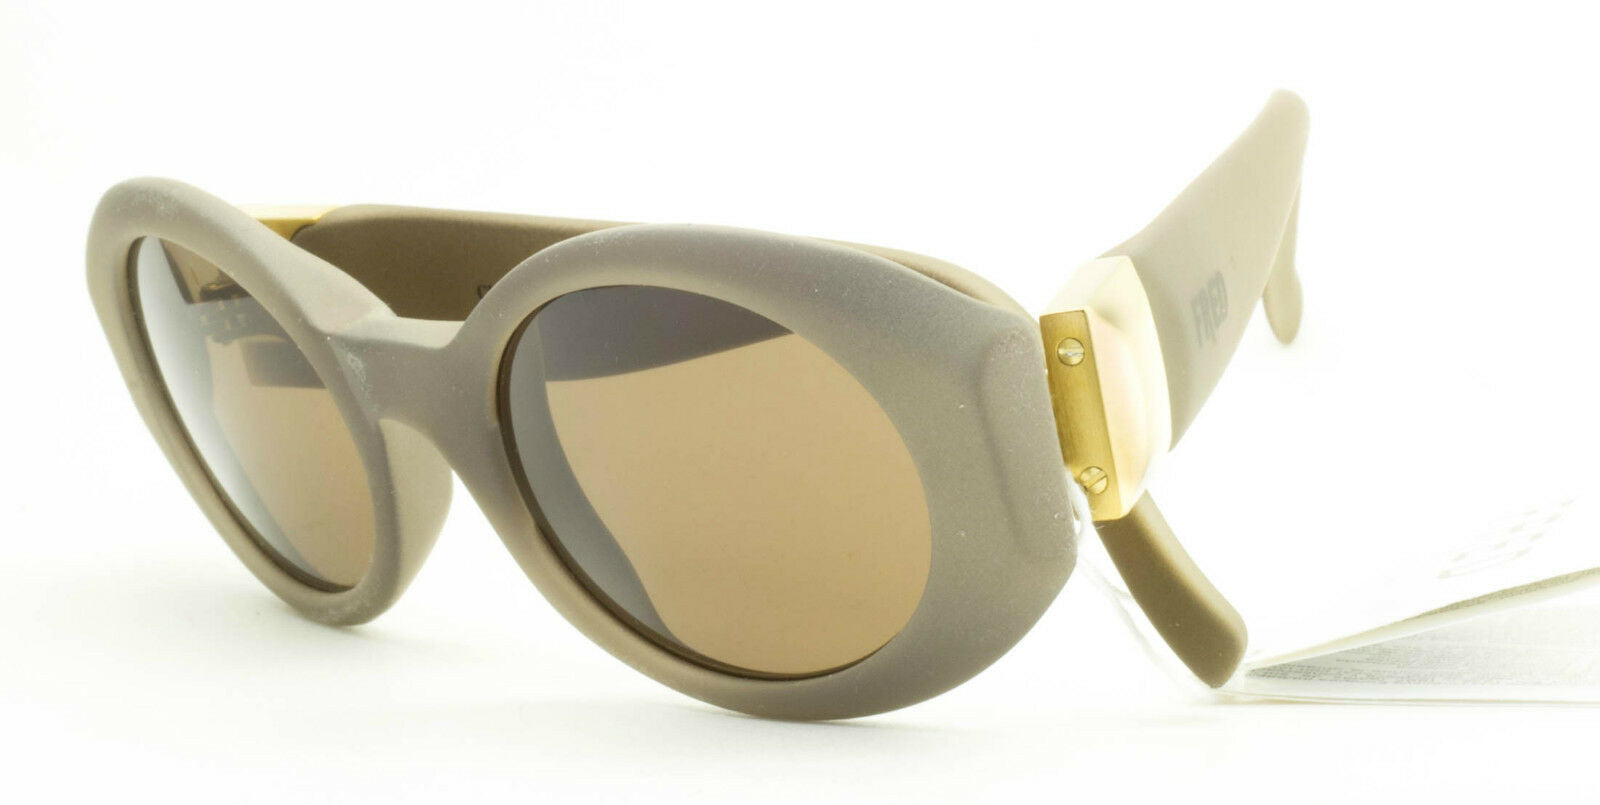 FRED CUT S3 col 03 Sunglasses Shades Glasses BNIB Brand New - France - TRUSTED